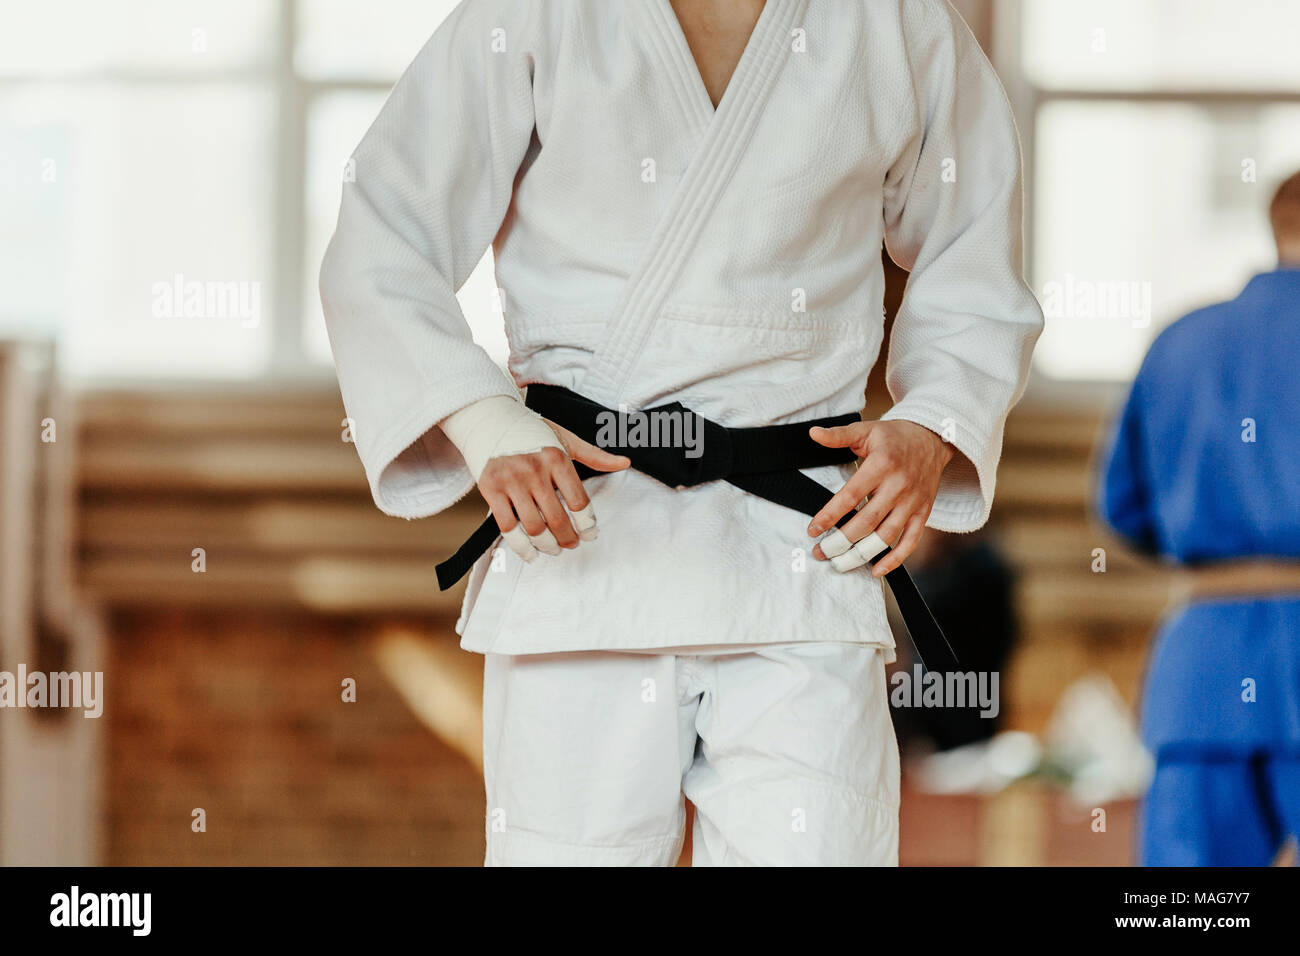 judoka white kimono with black belt competition judo Stock Photo - Alamy